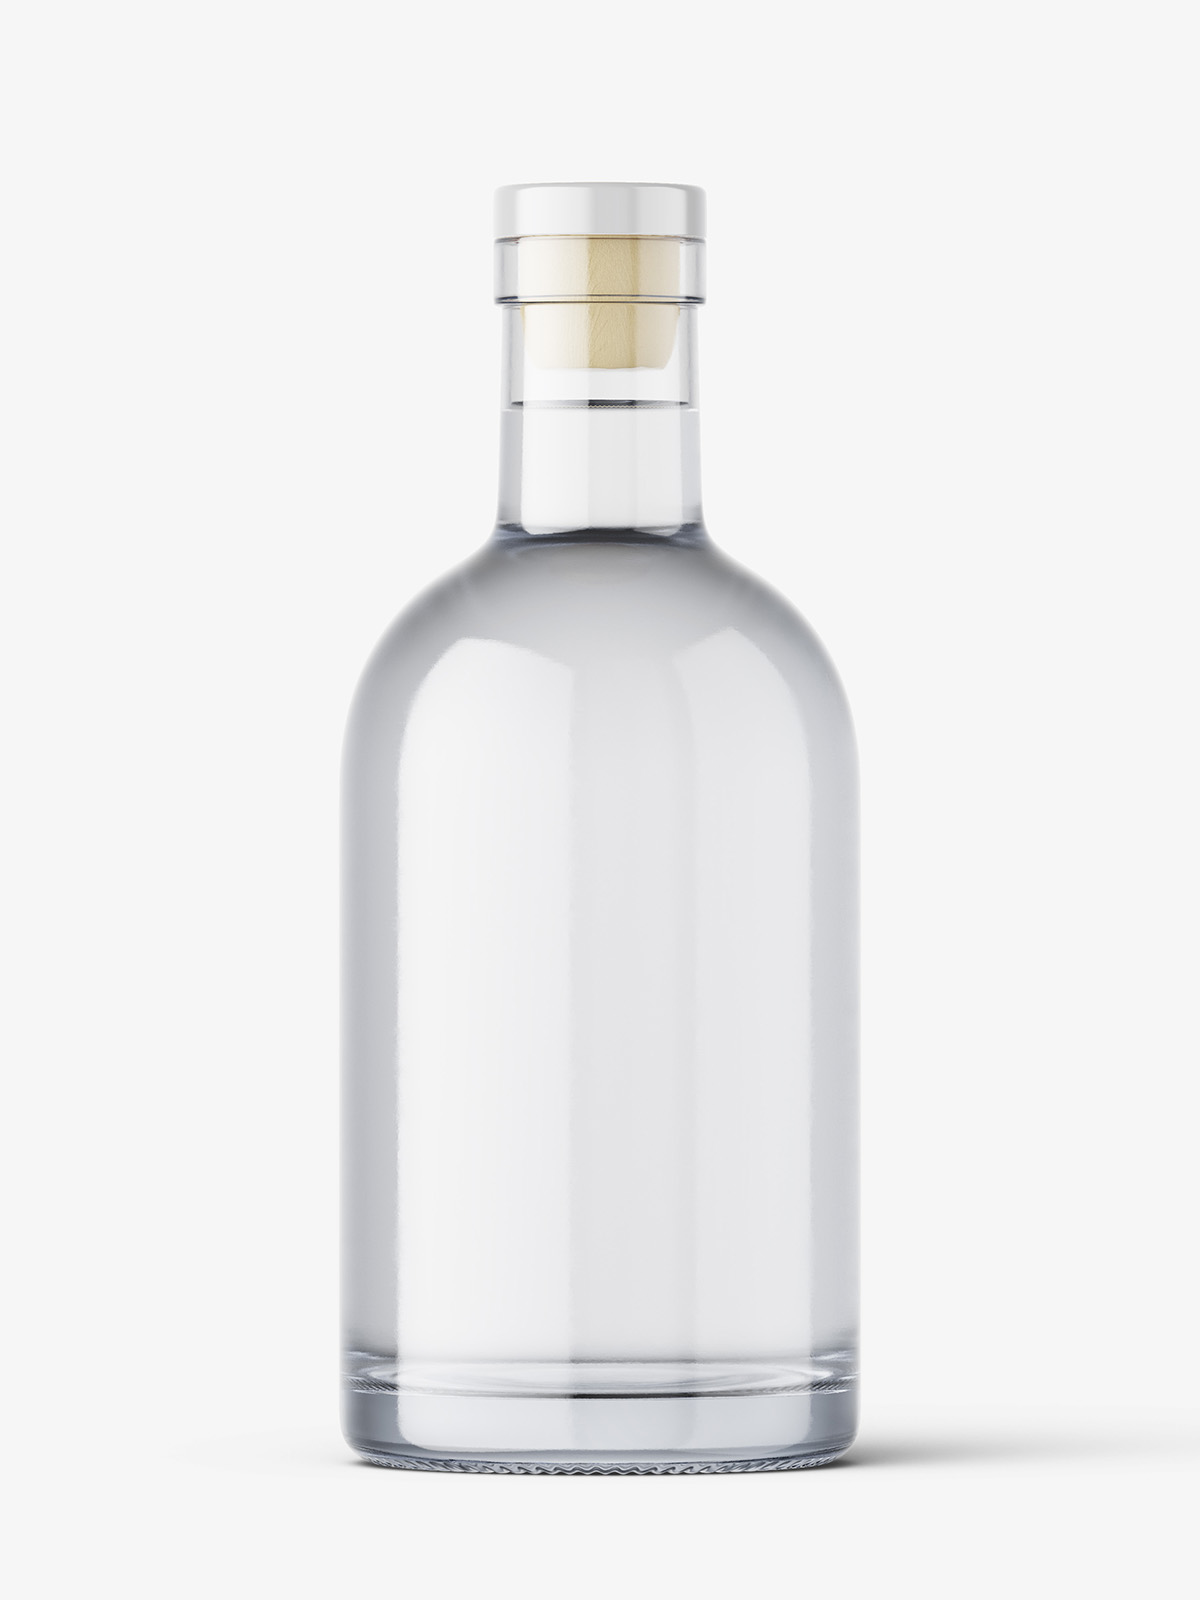 Download Clear Glass Liquor Bottle Mockup Front View : Clear Glass Cognac Bottle Mockup Front View In ...